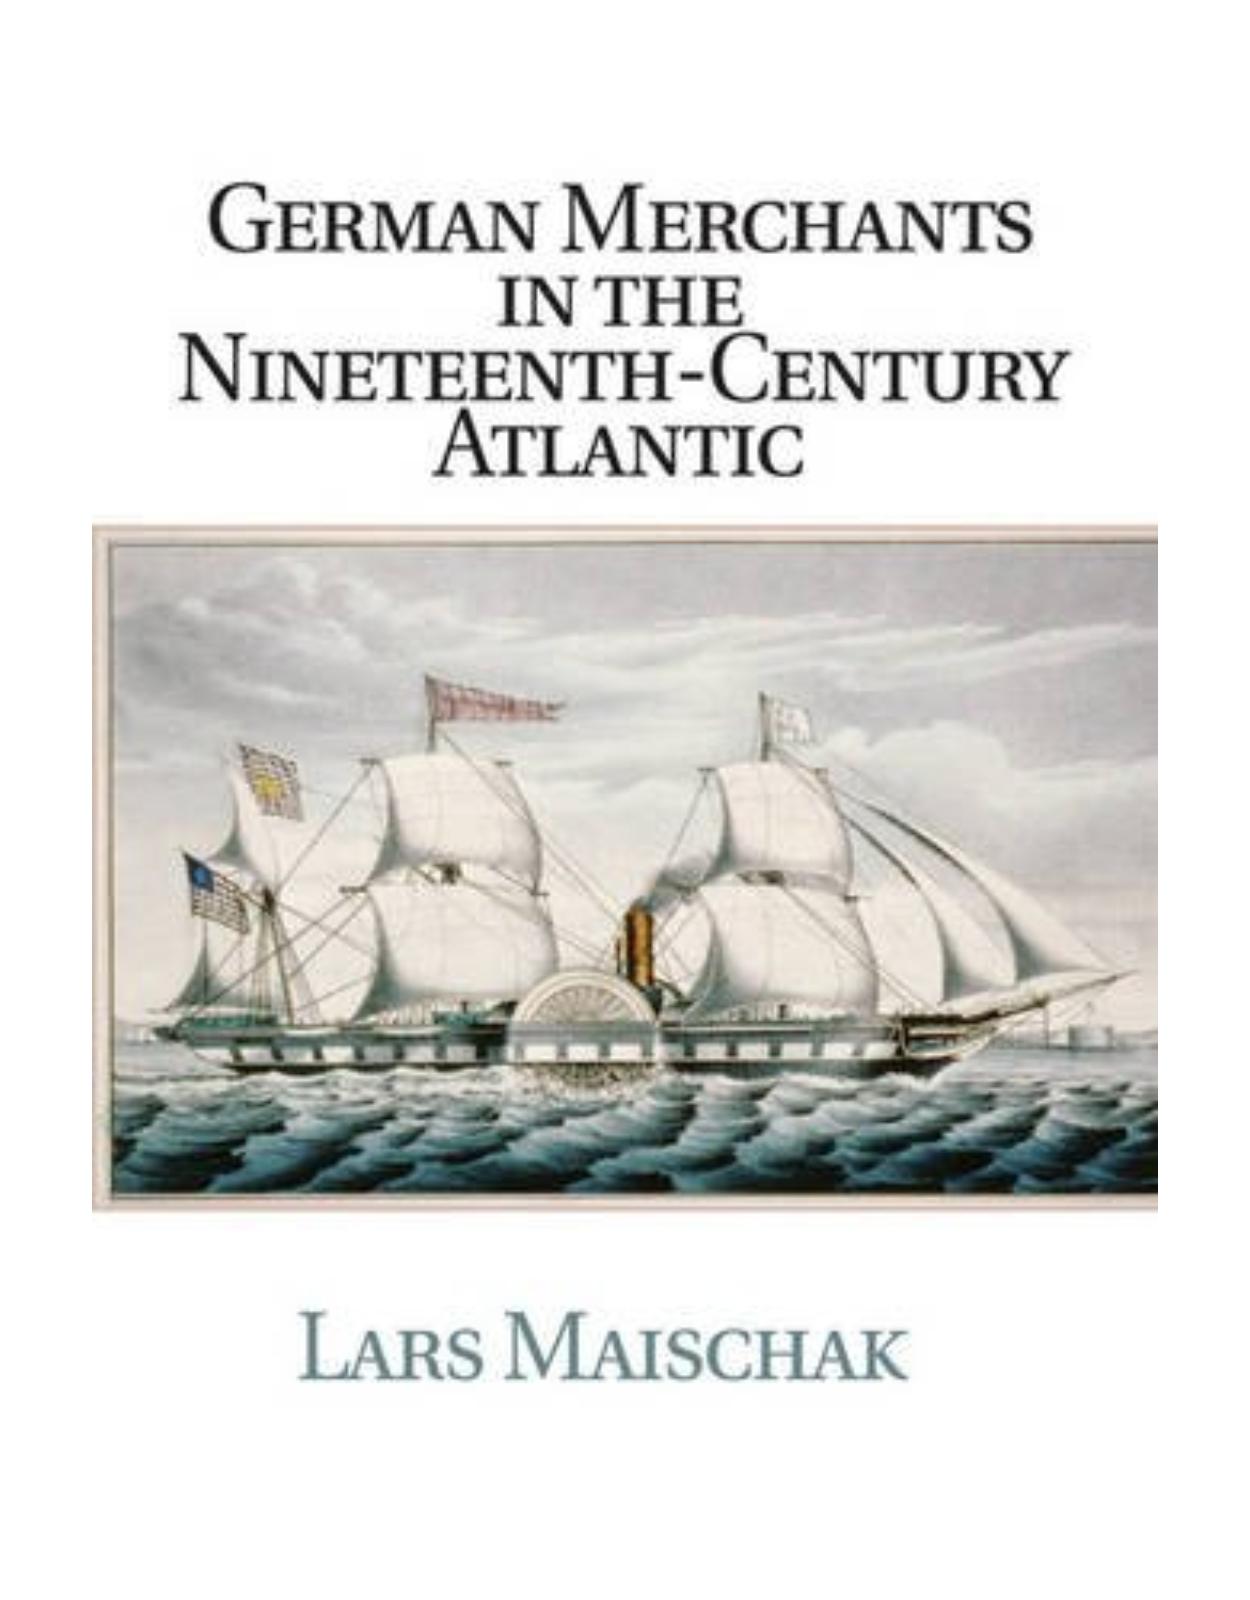 German Merchants in the Nineteenth-Century Atlantic (Publications of the German Historical Institute)